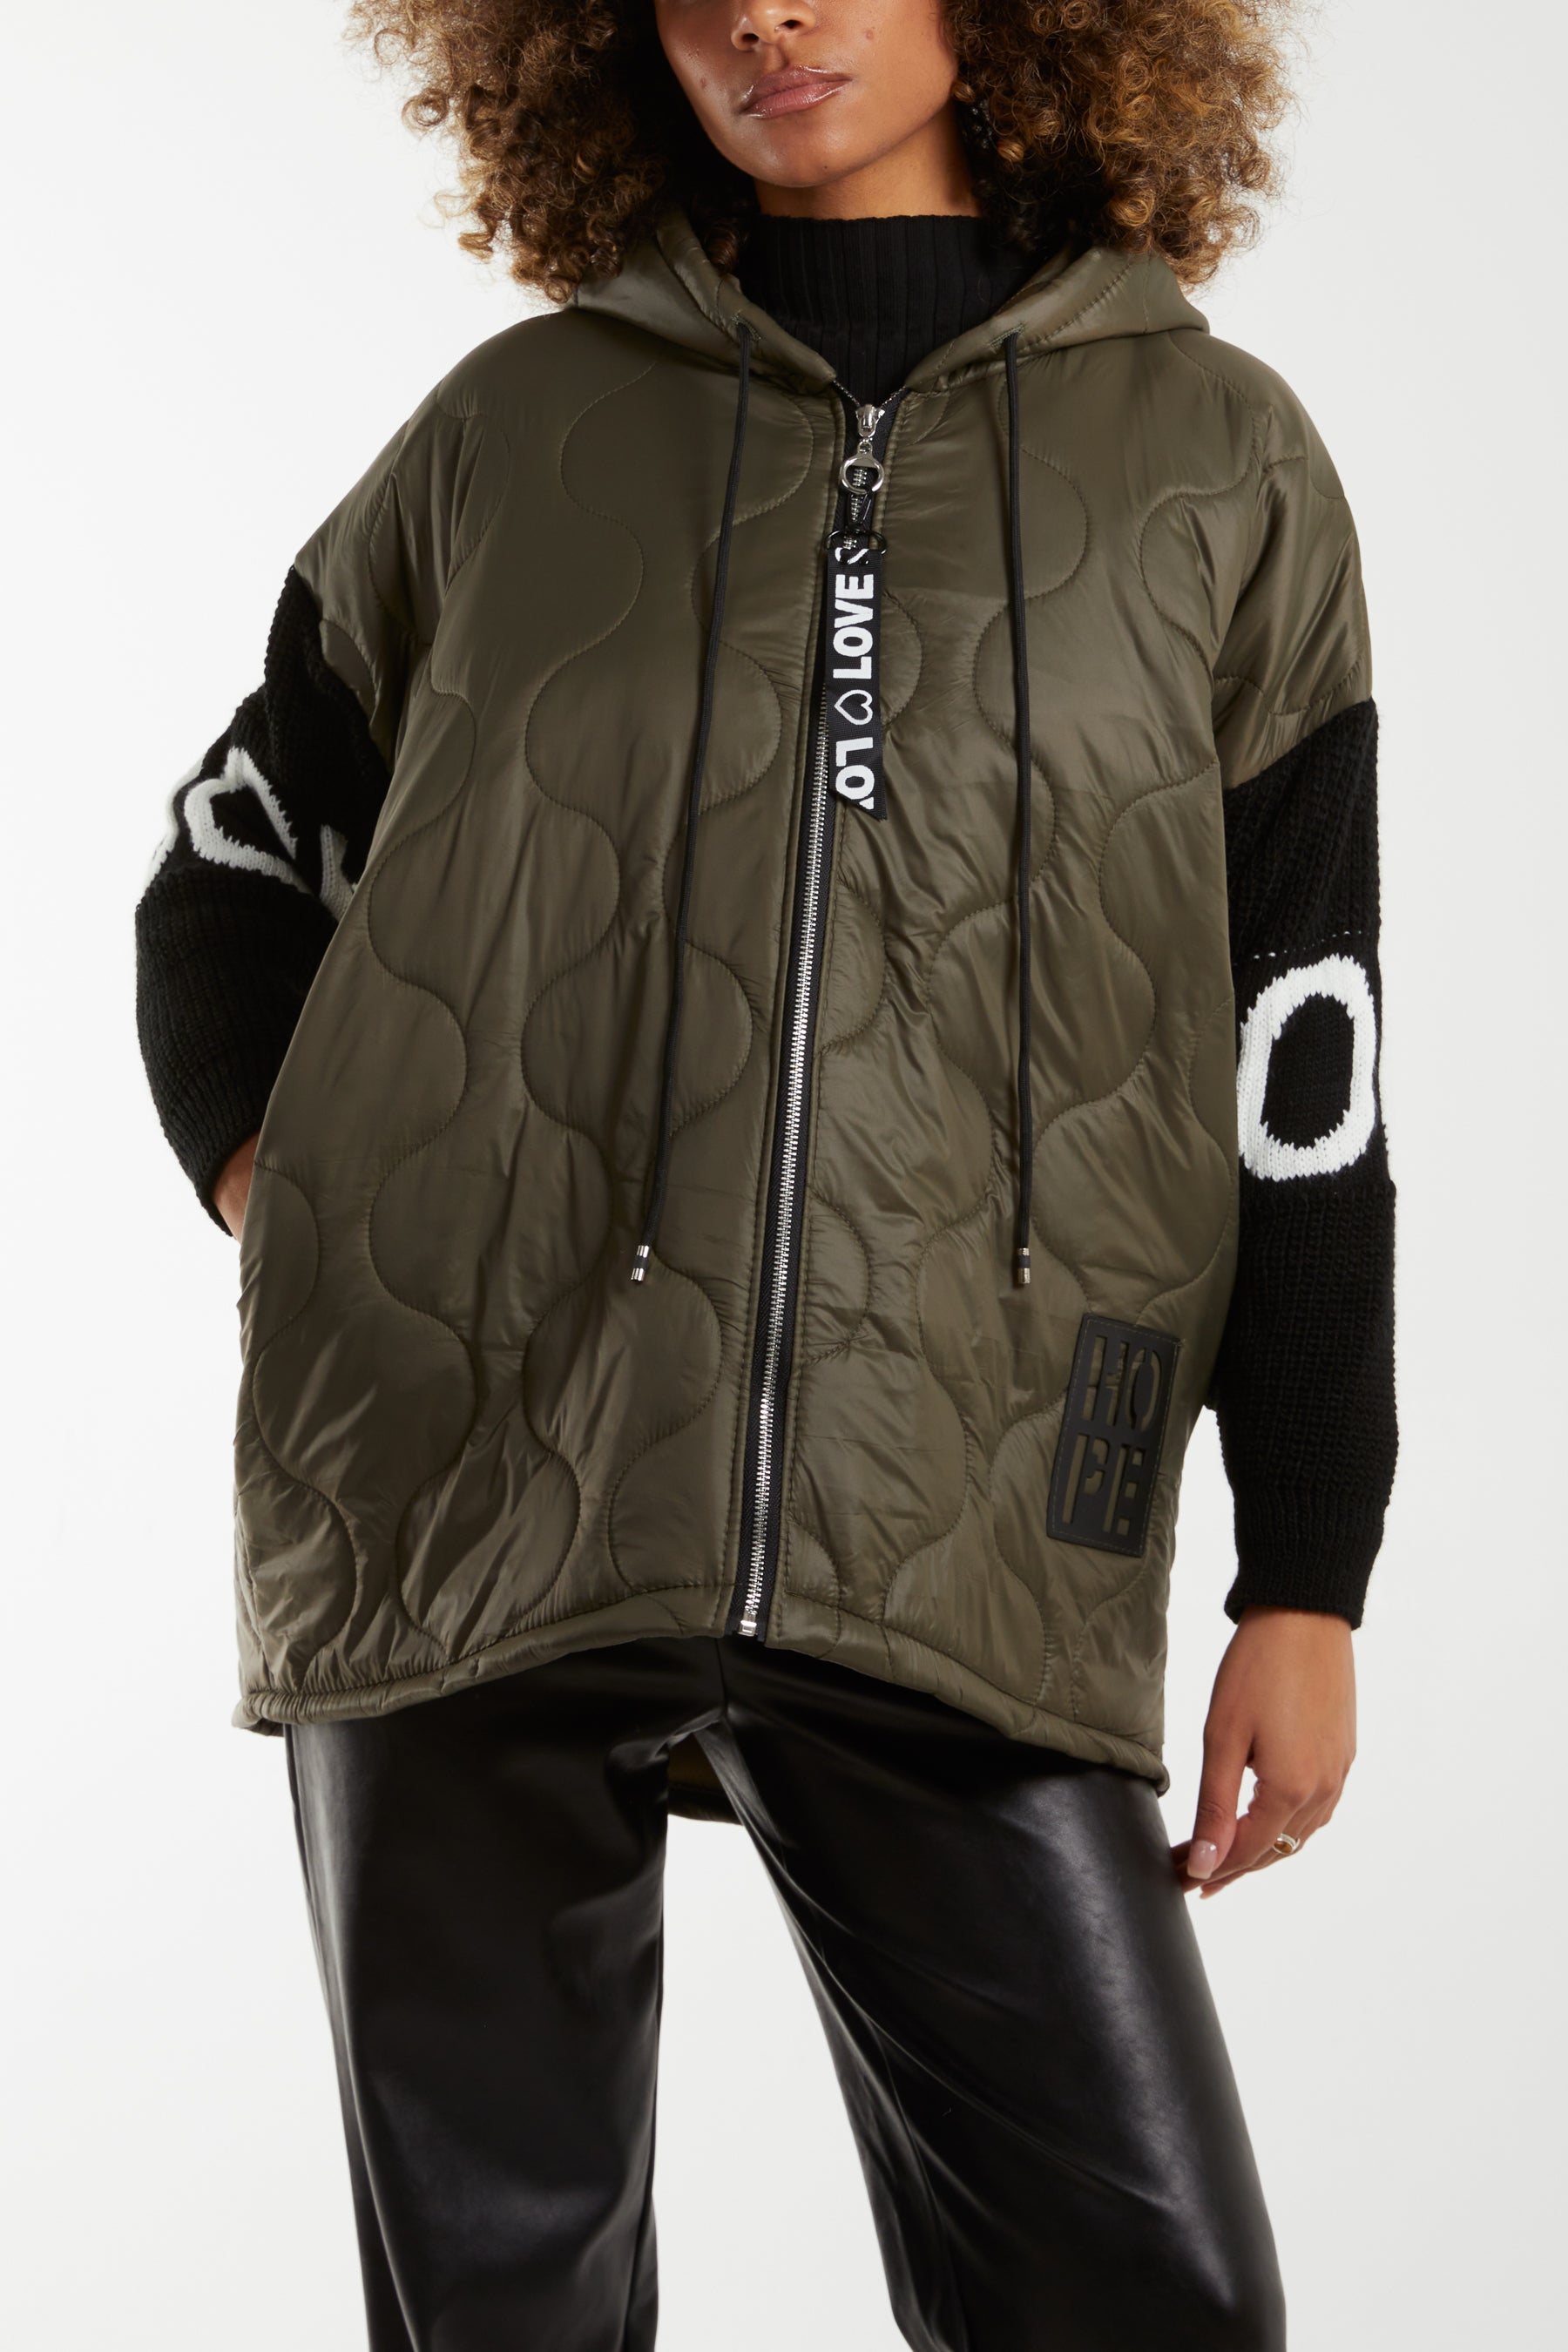 Zip Up Hooded Jacket w/ Contrast 'Rock' Sleeve